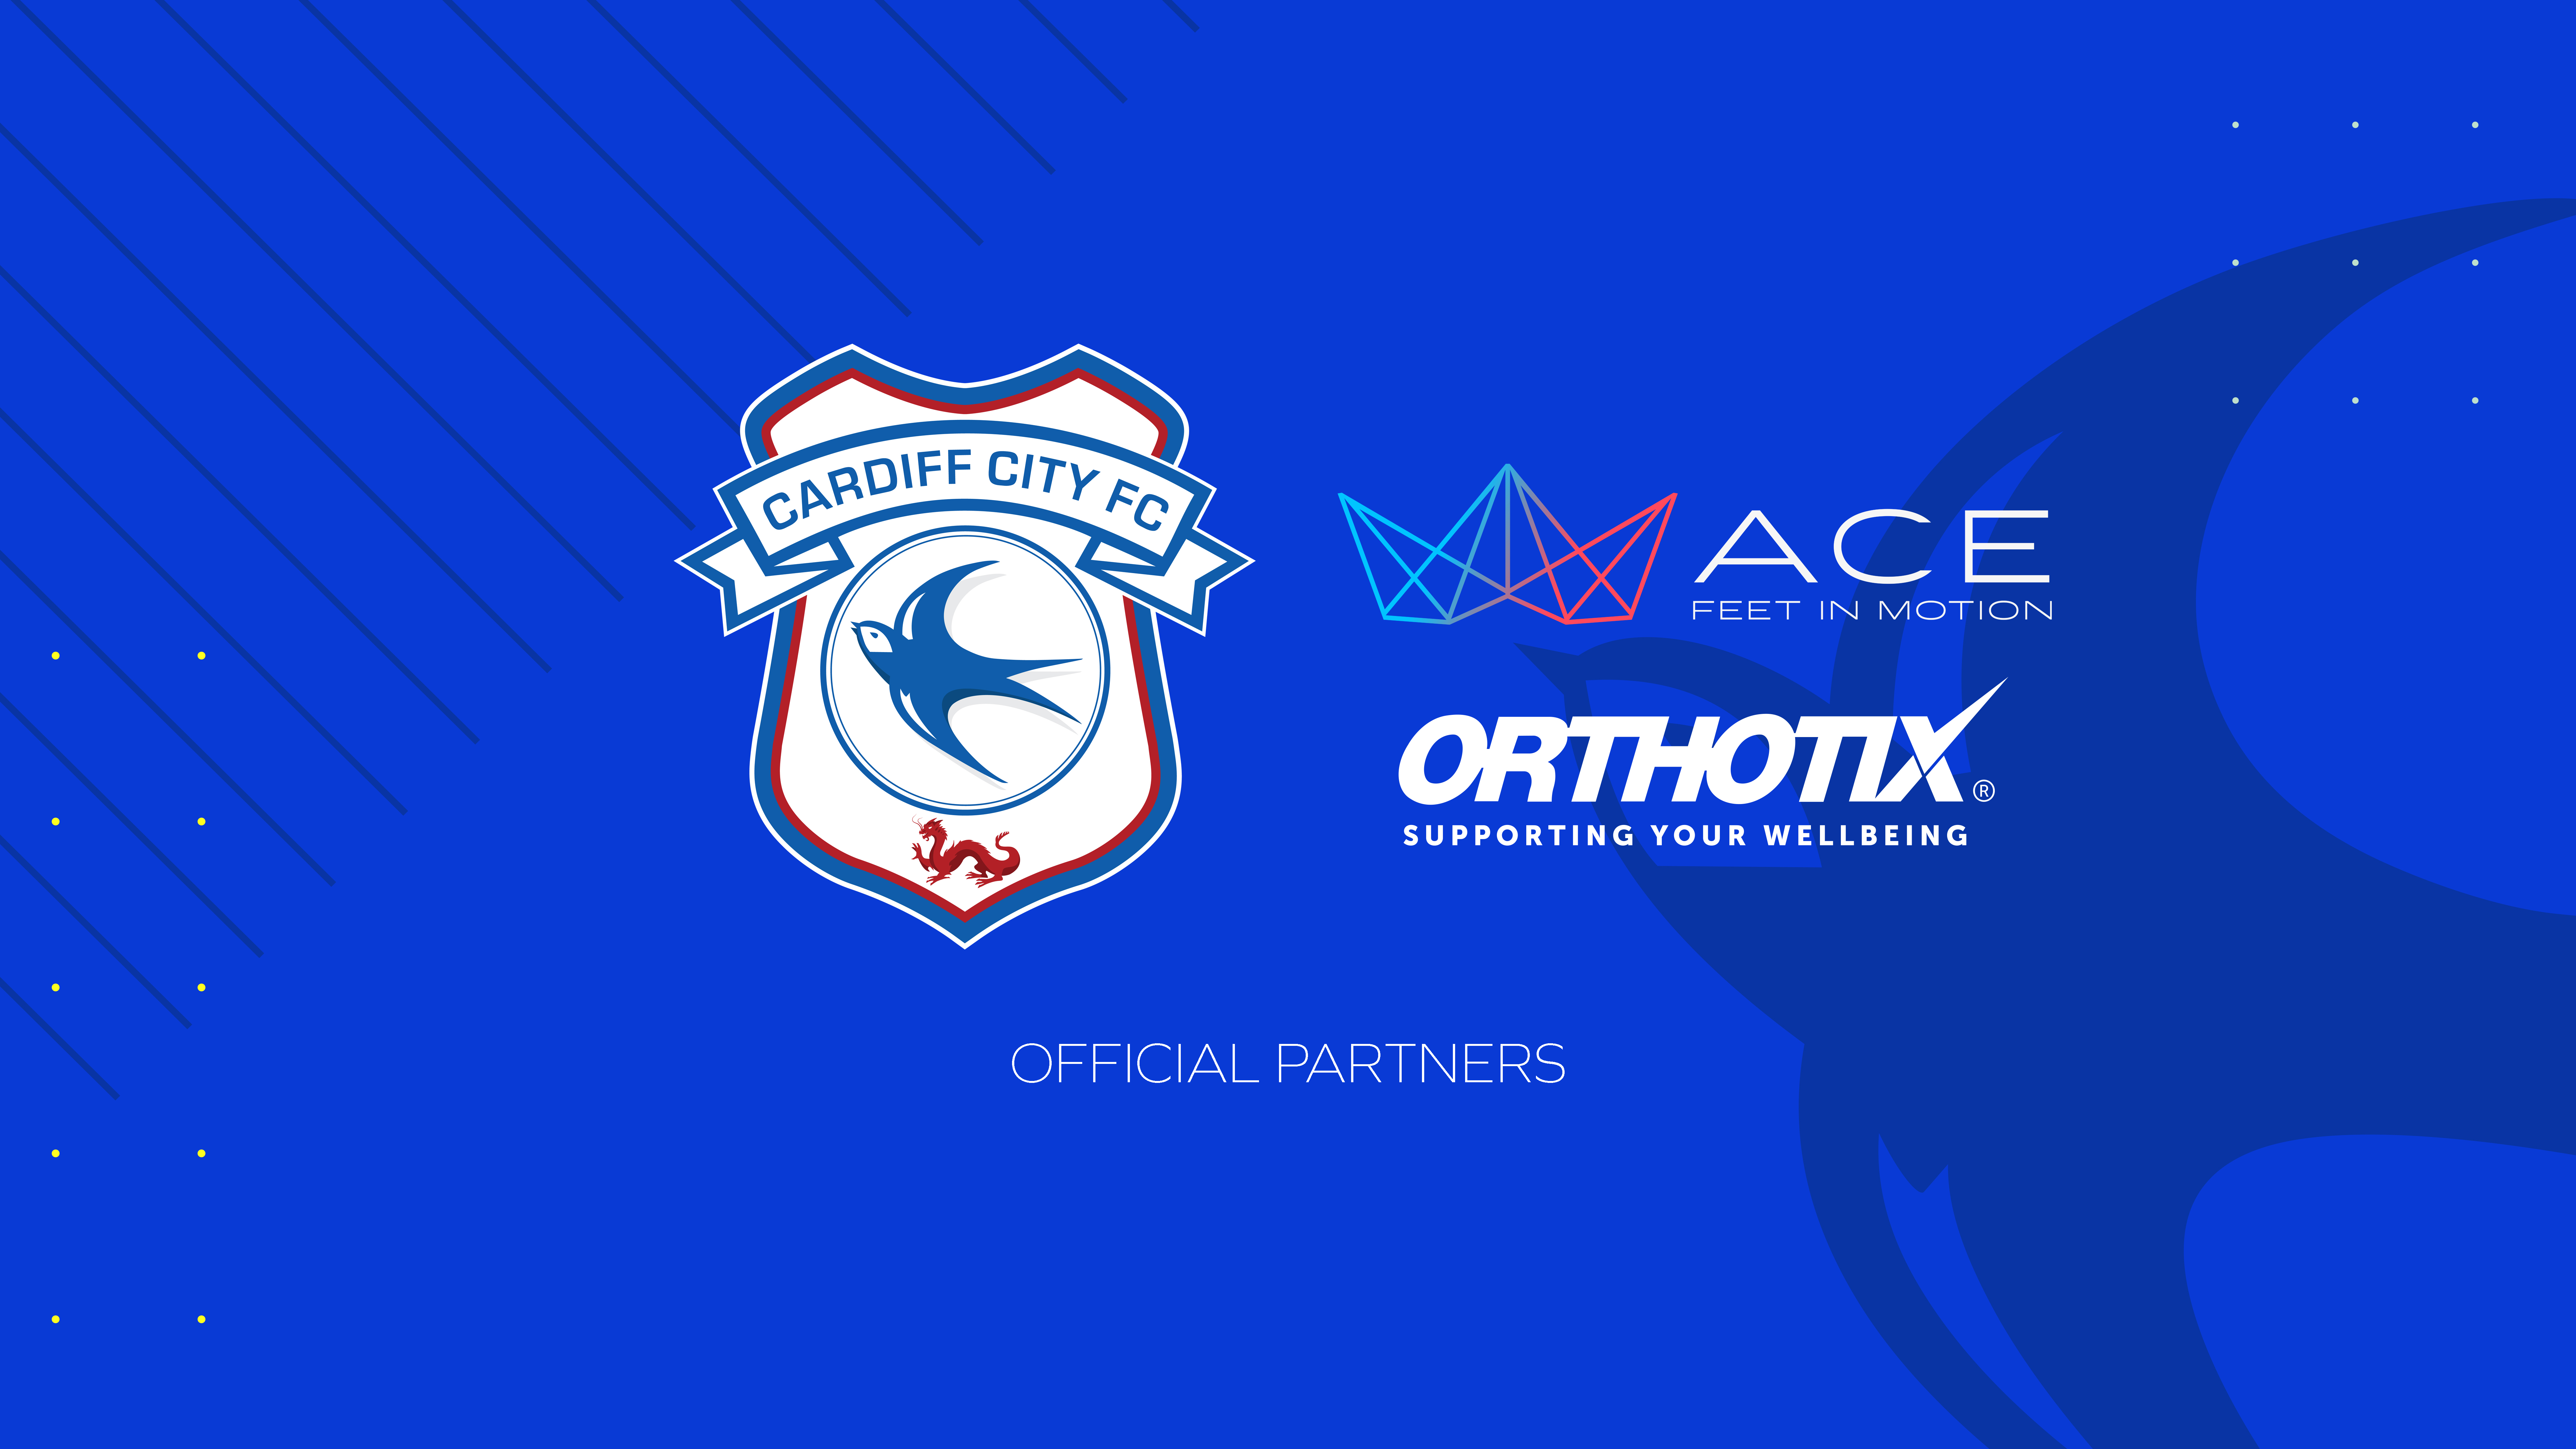 Official Partnership - Orthotix & Cardiff City Football Club